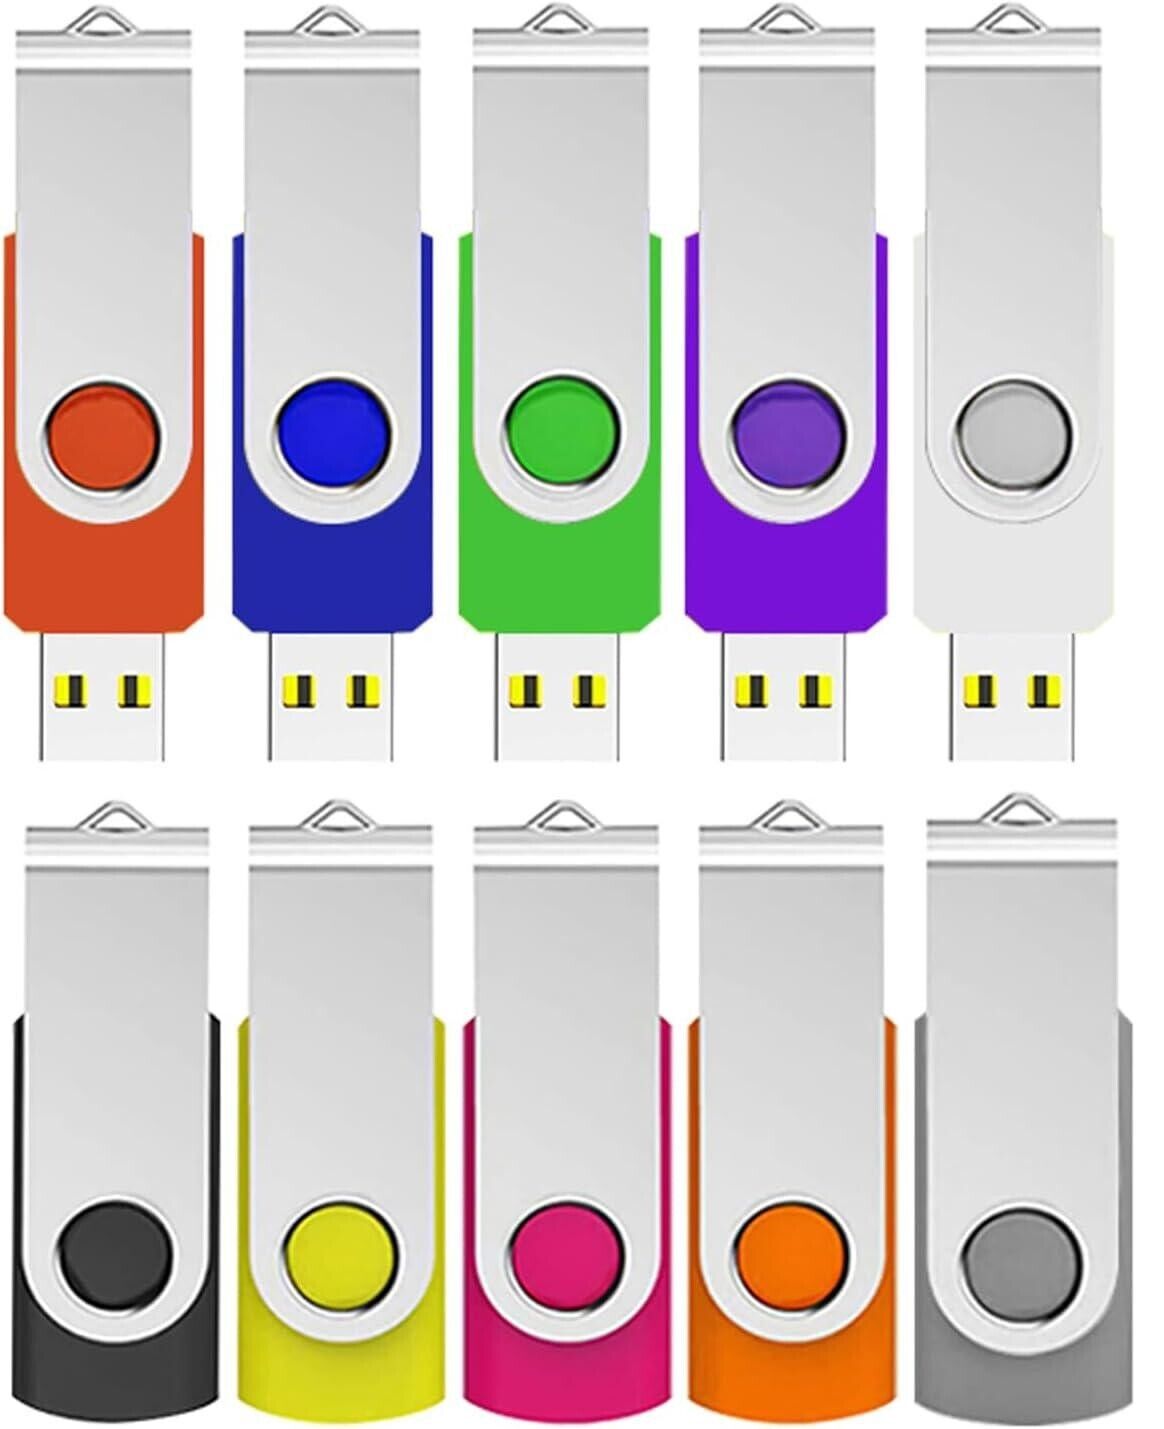 10 Pack 32GB USB 2.0 Flash Drive Memory Stick Pendrive Thumb Drive